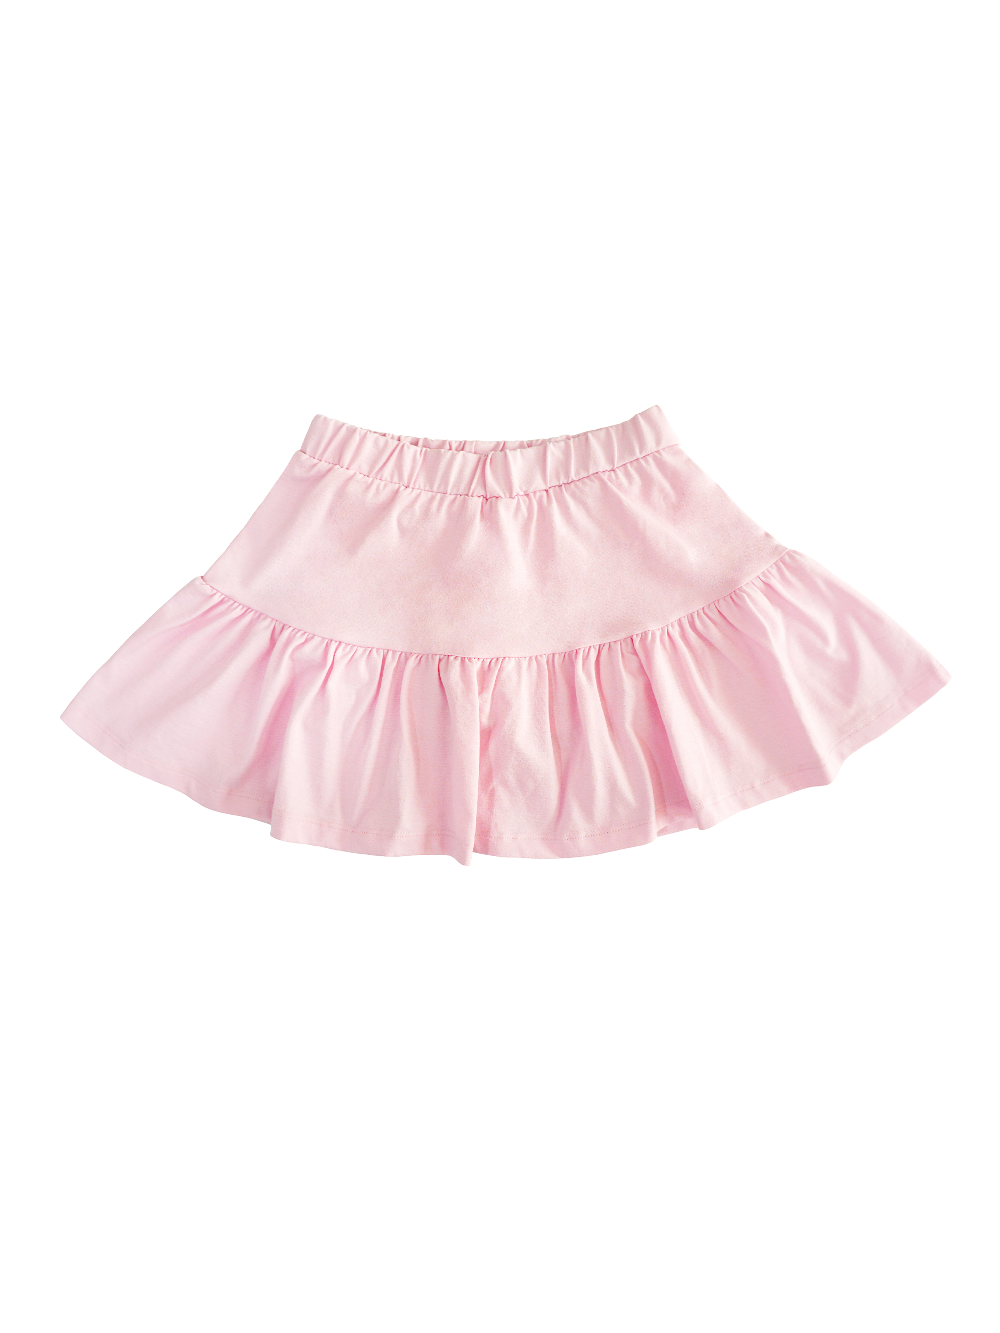 Soft Ice Skirt : Pink